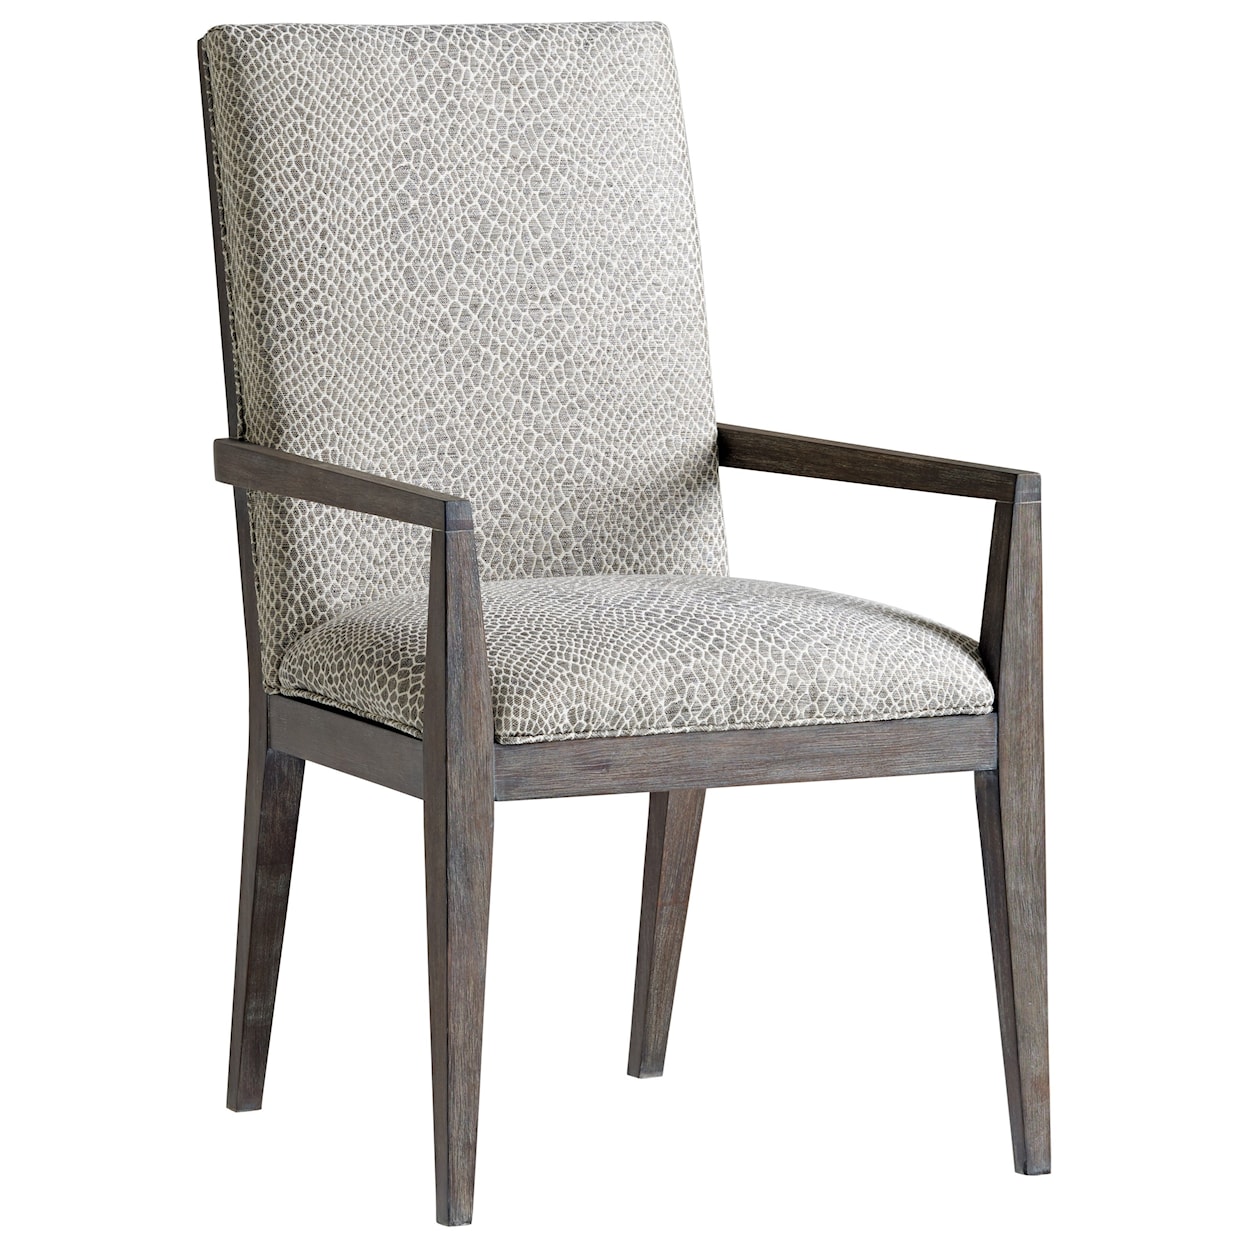 Lexington Santana Bodega Upholstered Arm Chair